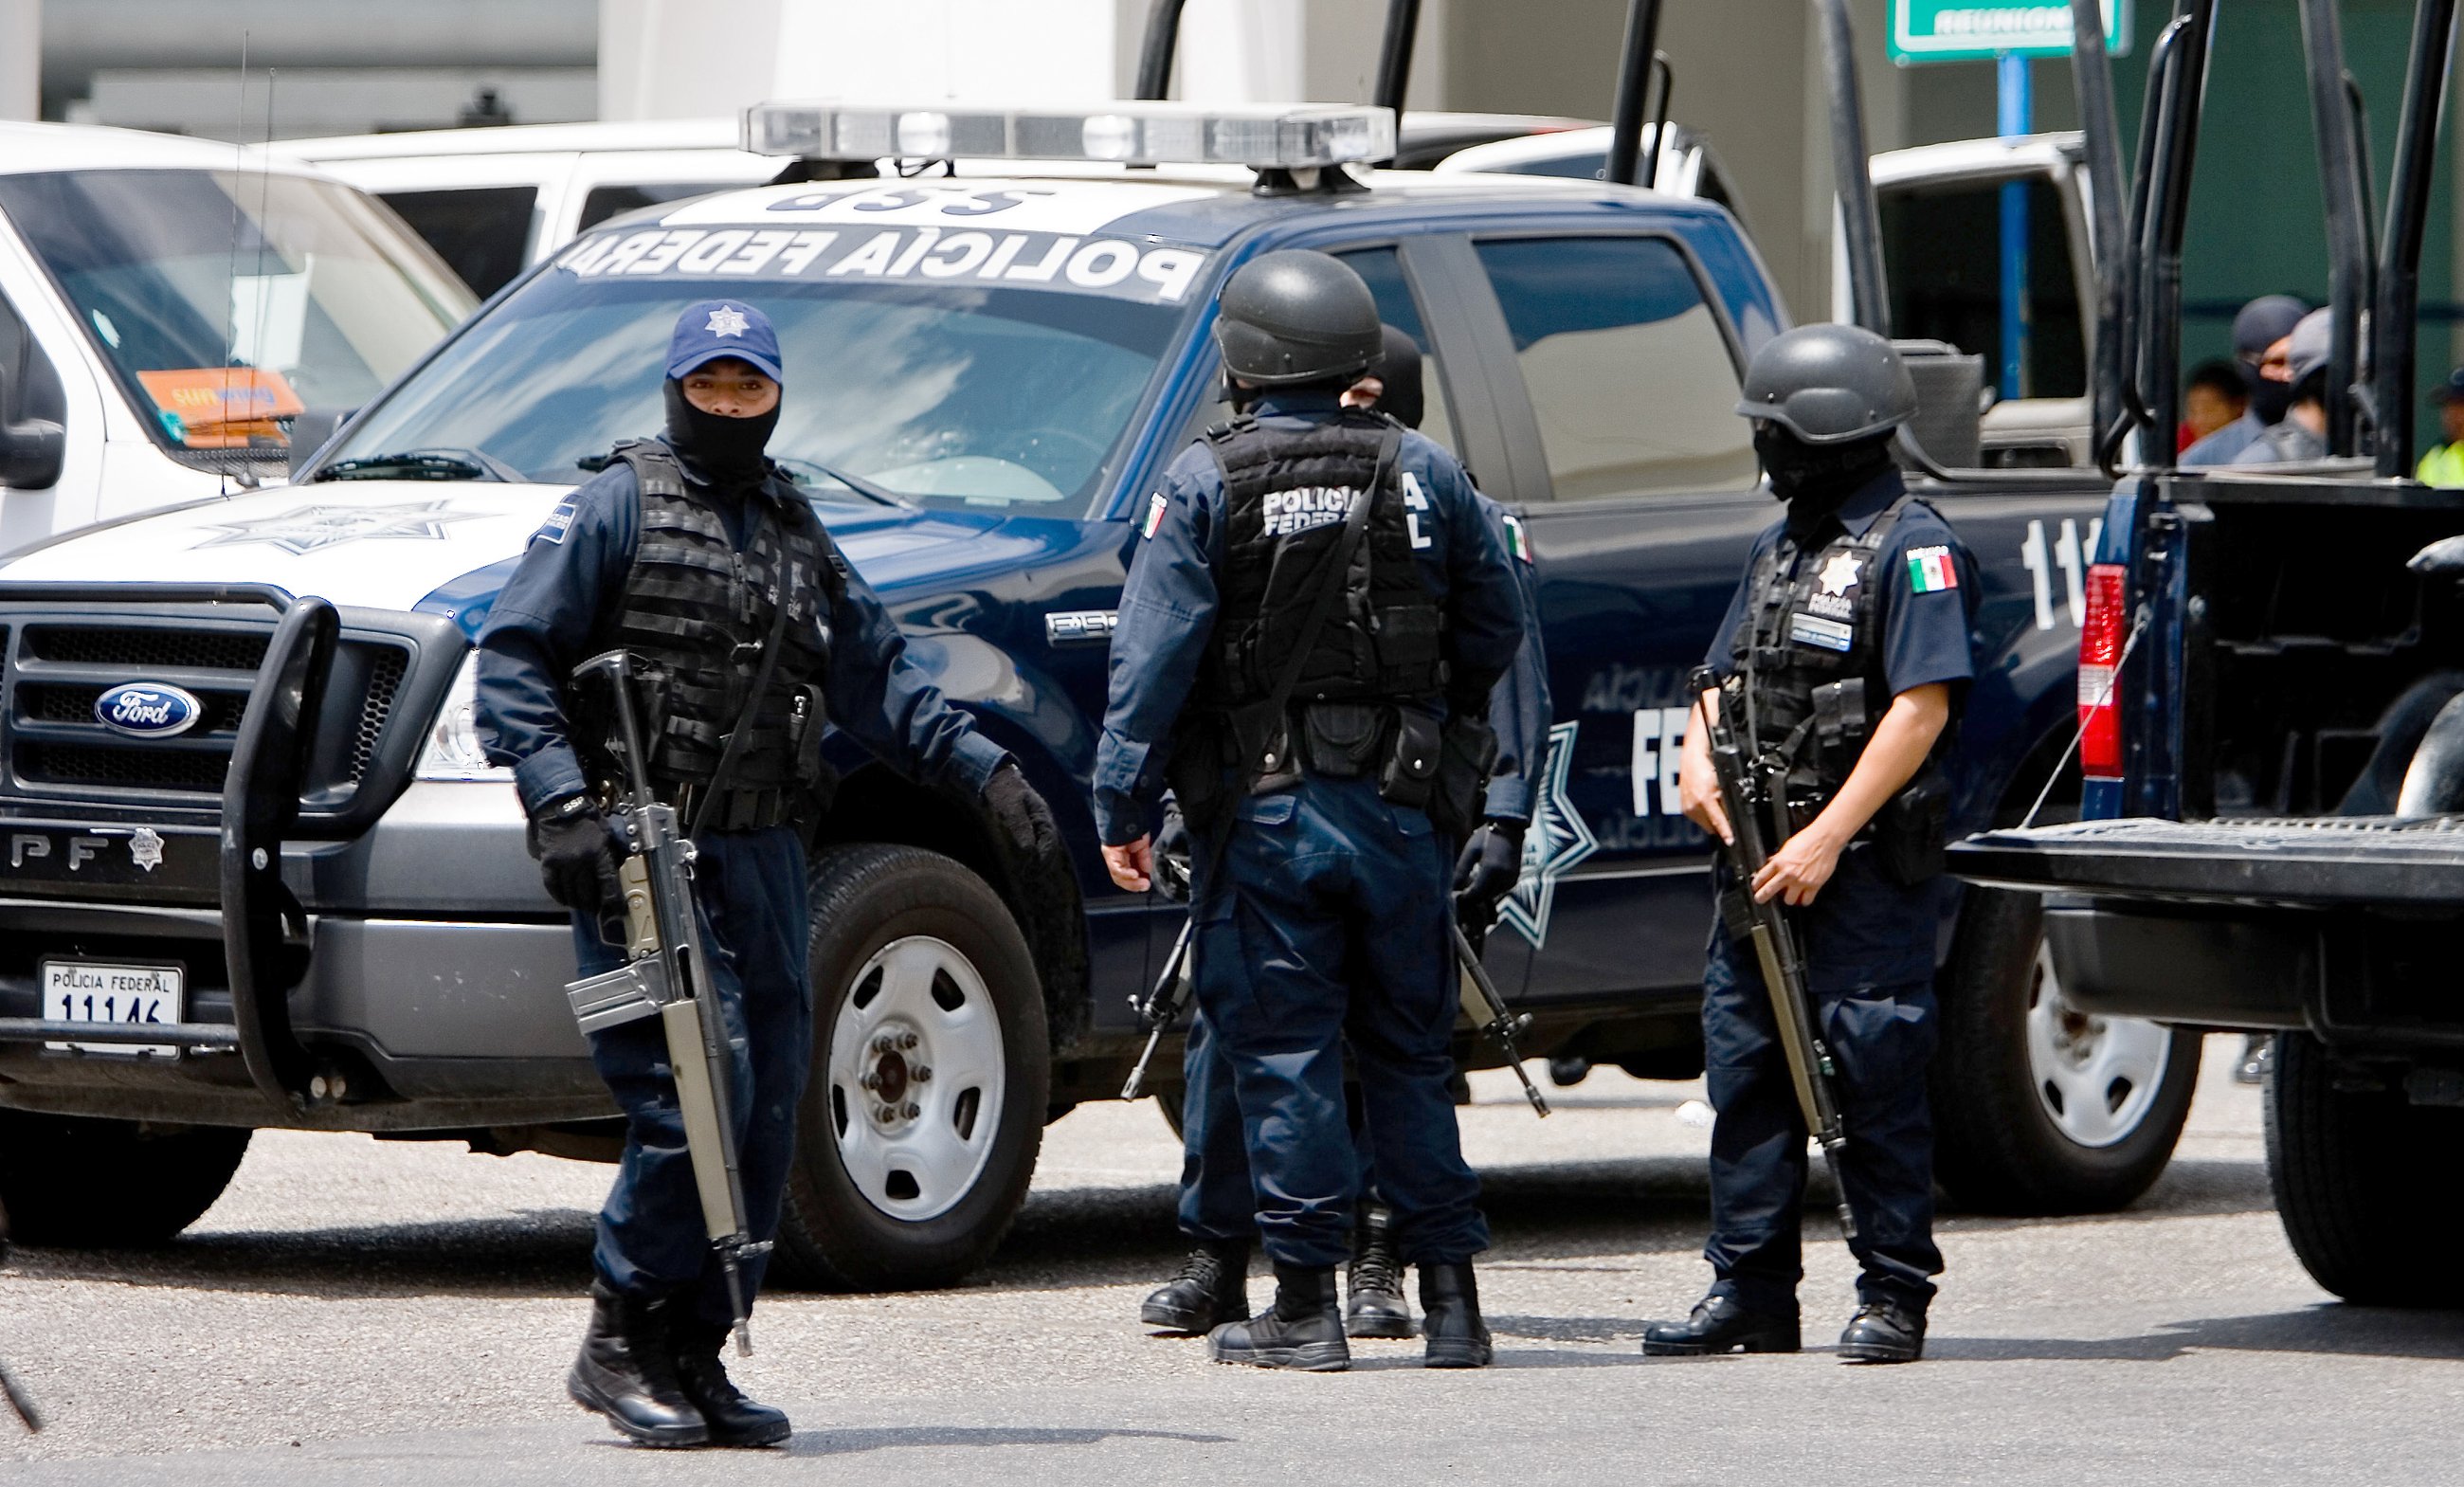 Policia Federal (Fotografias) - Página 7 Pfp-en-cancun